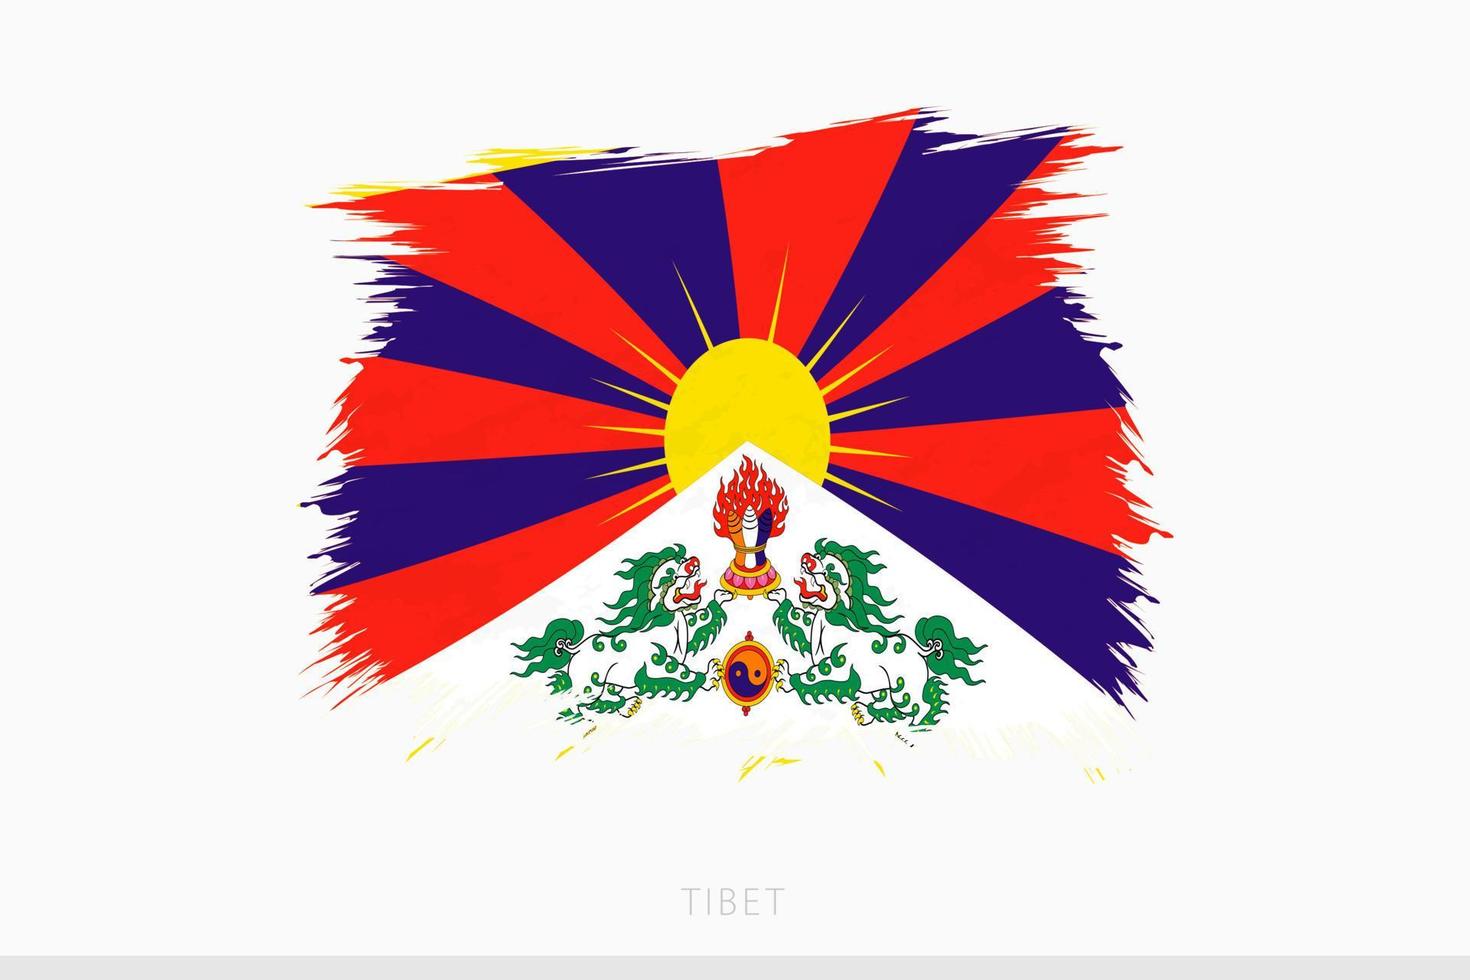 Grunge flag of Tibet, vector abstract grunge brushed flag of Tibet.